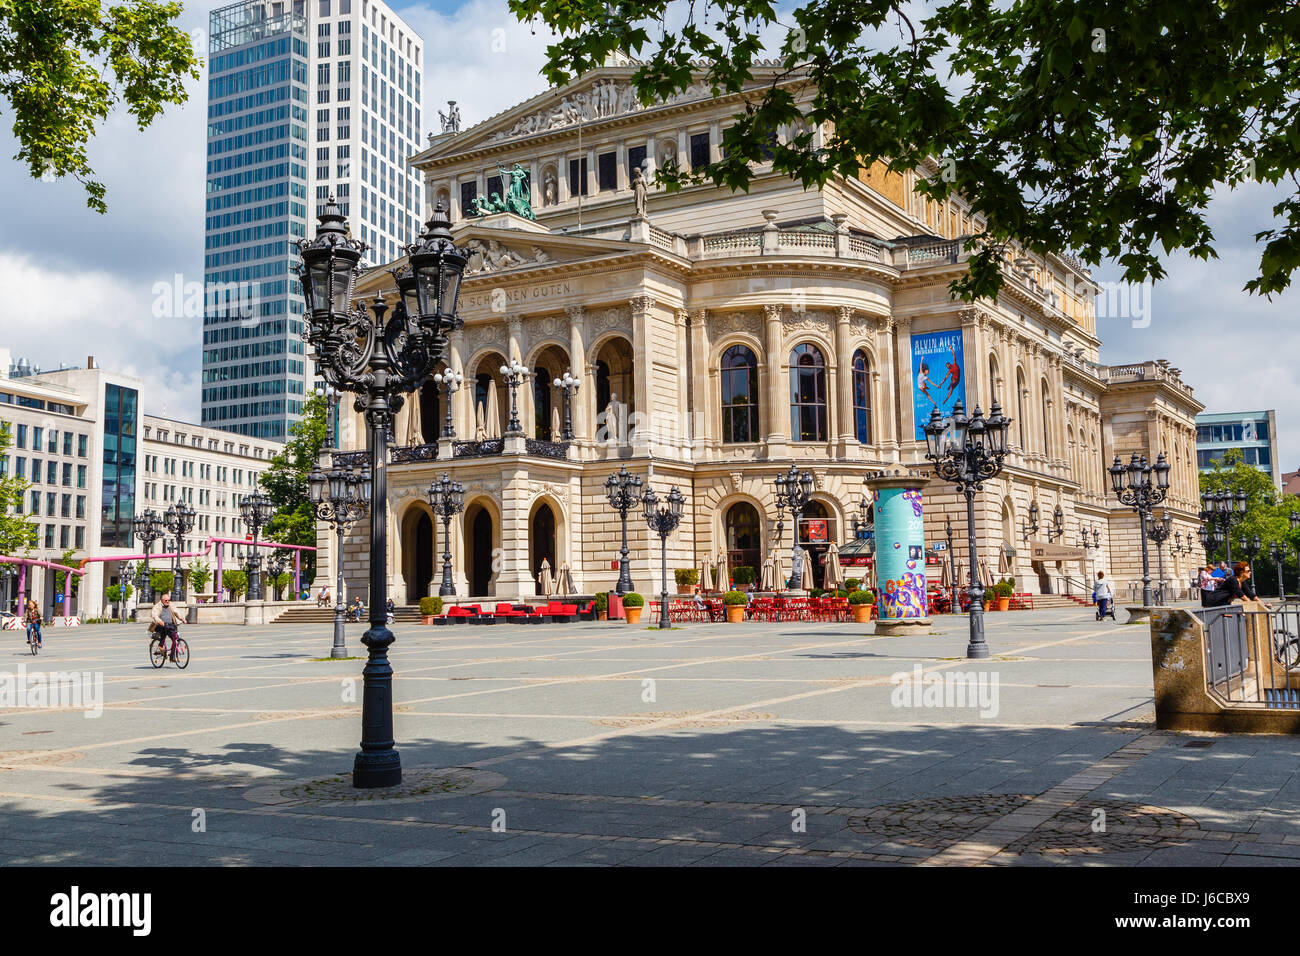 Alte Oper ('Old Opera') in Frankfurt, Germany. May 2017. Stock Photo